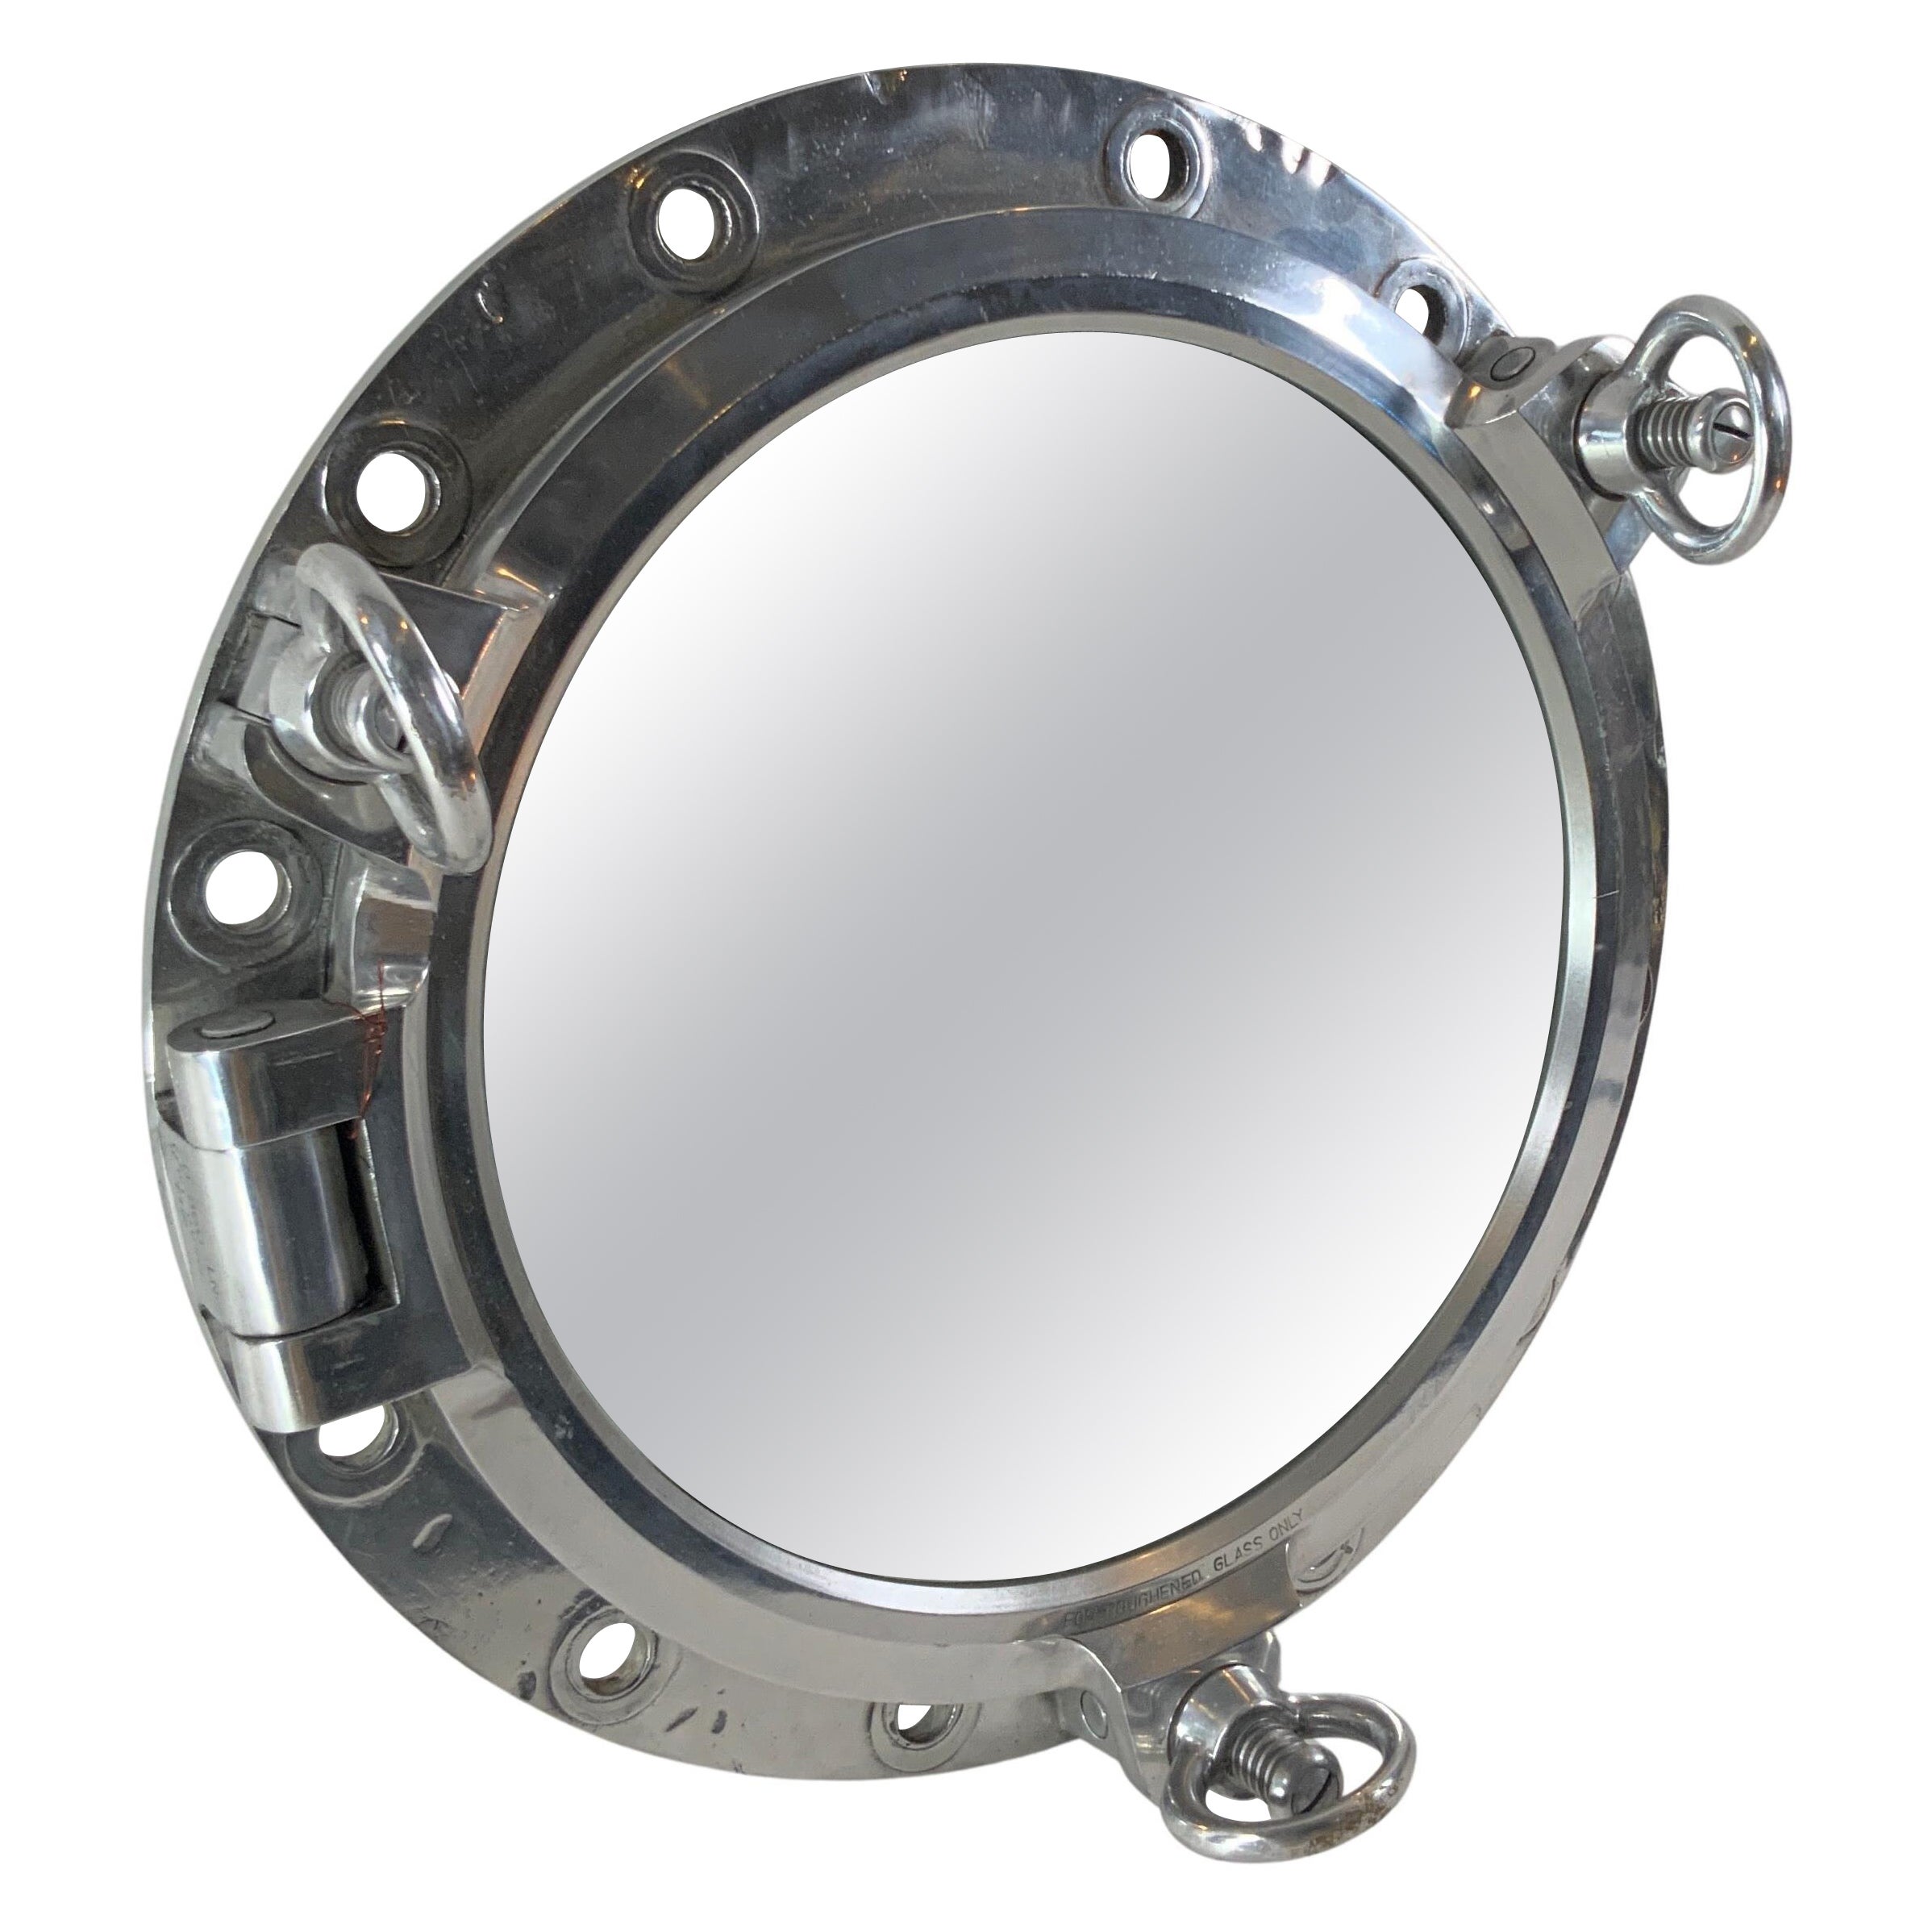 Aluminum Ship's Porthole Mirror